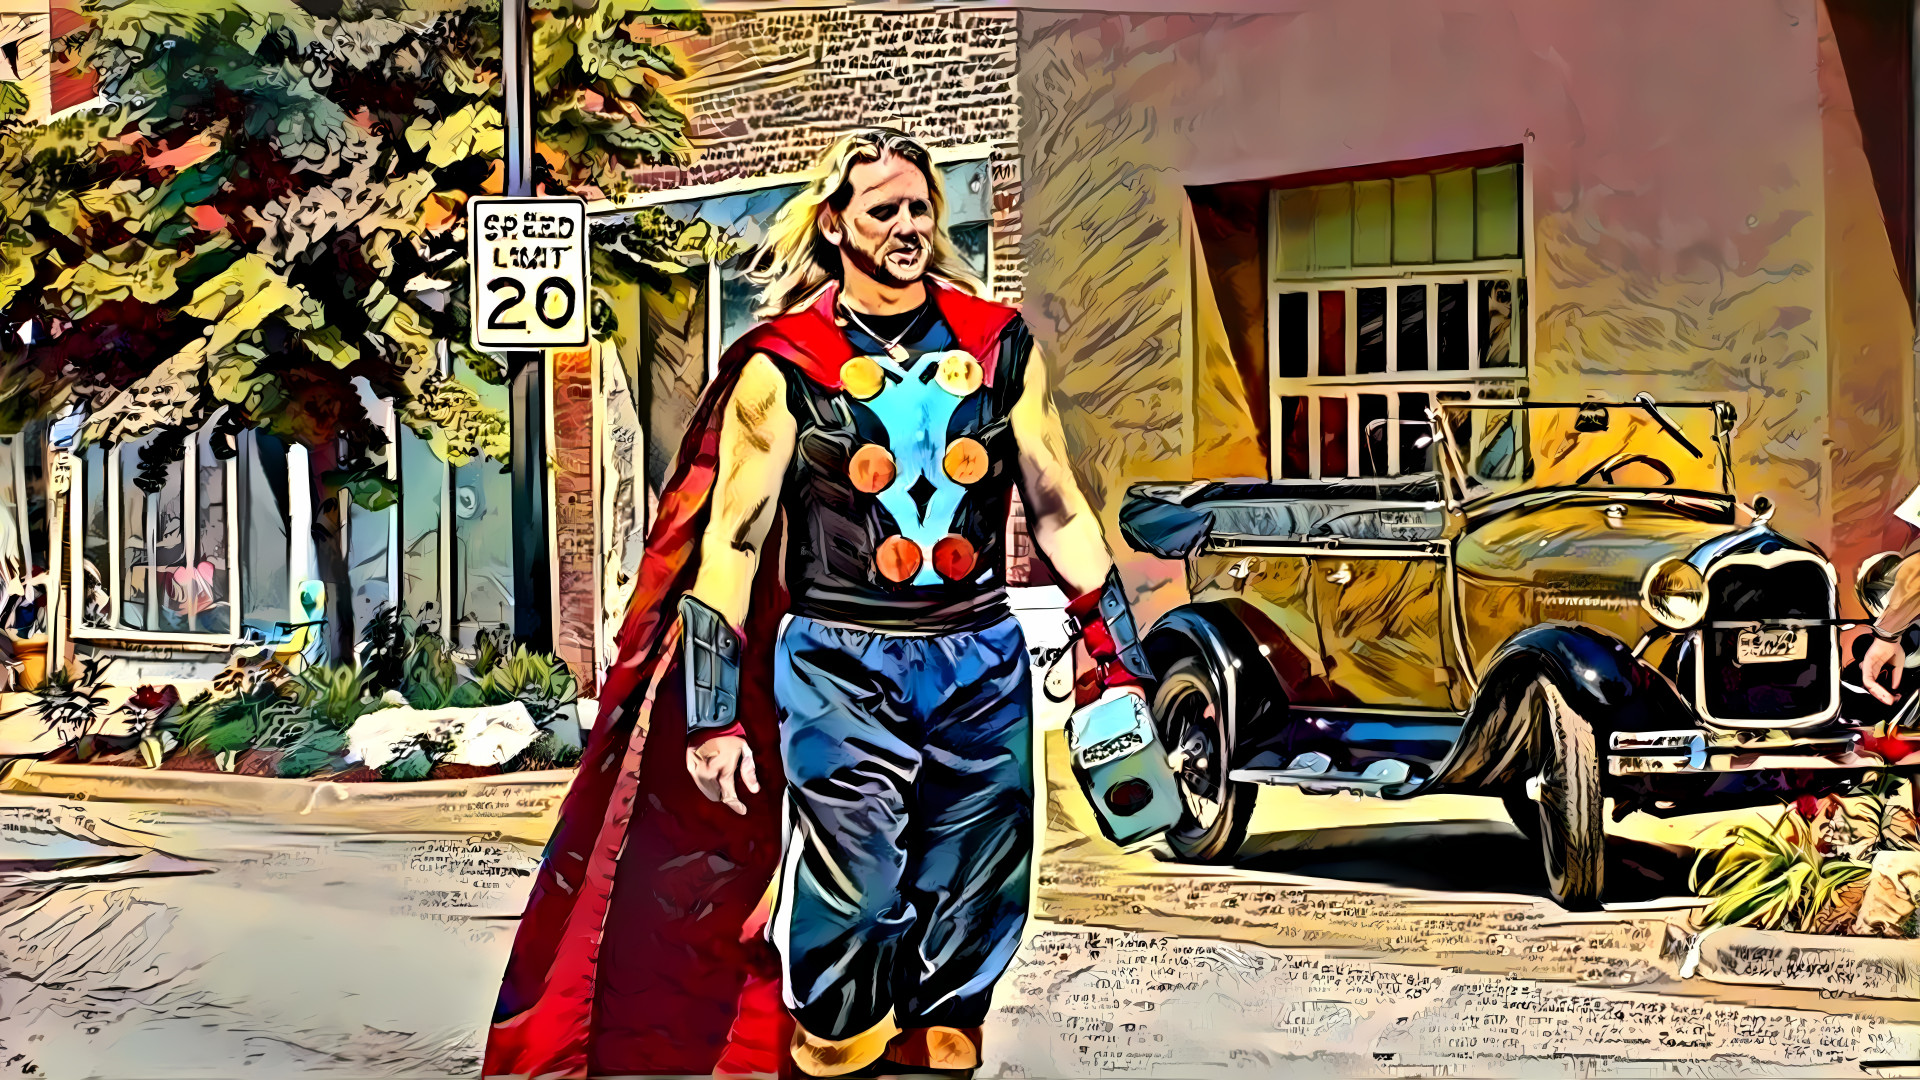 Thor 